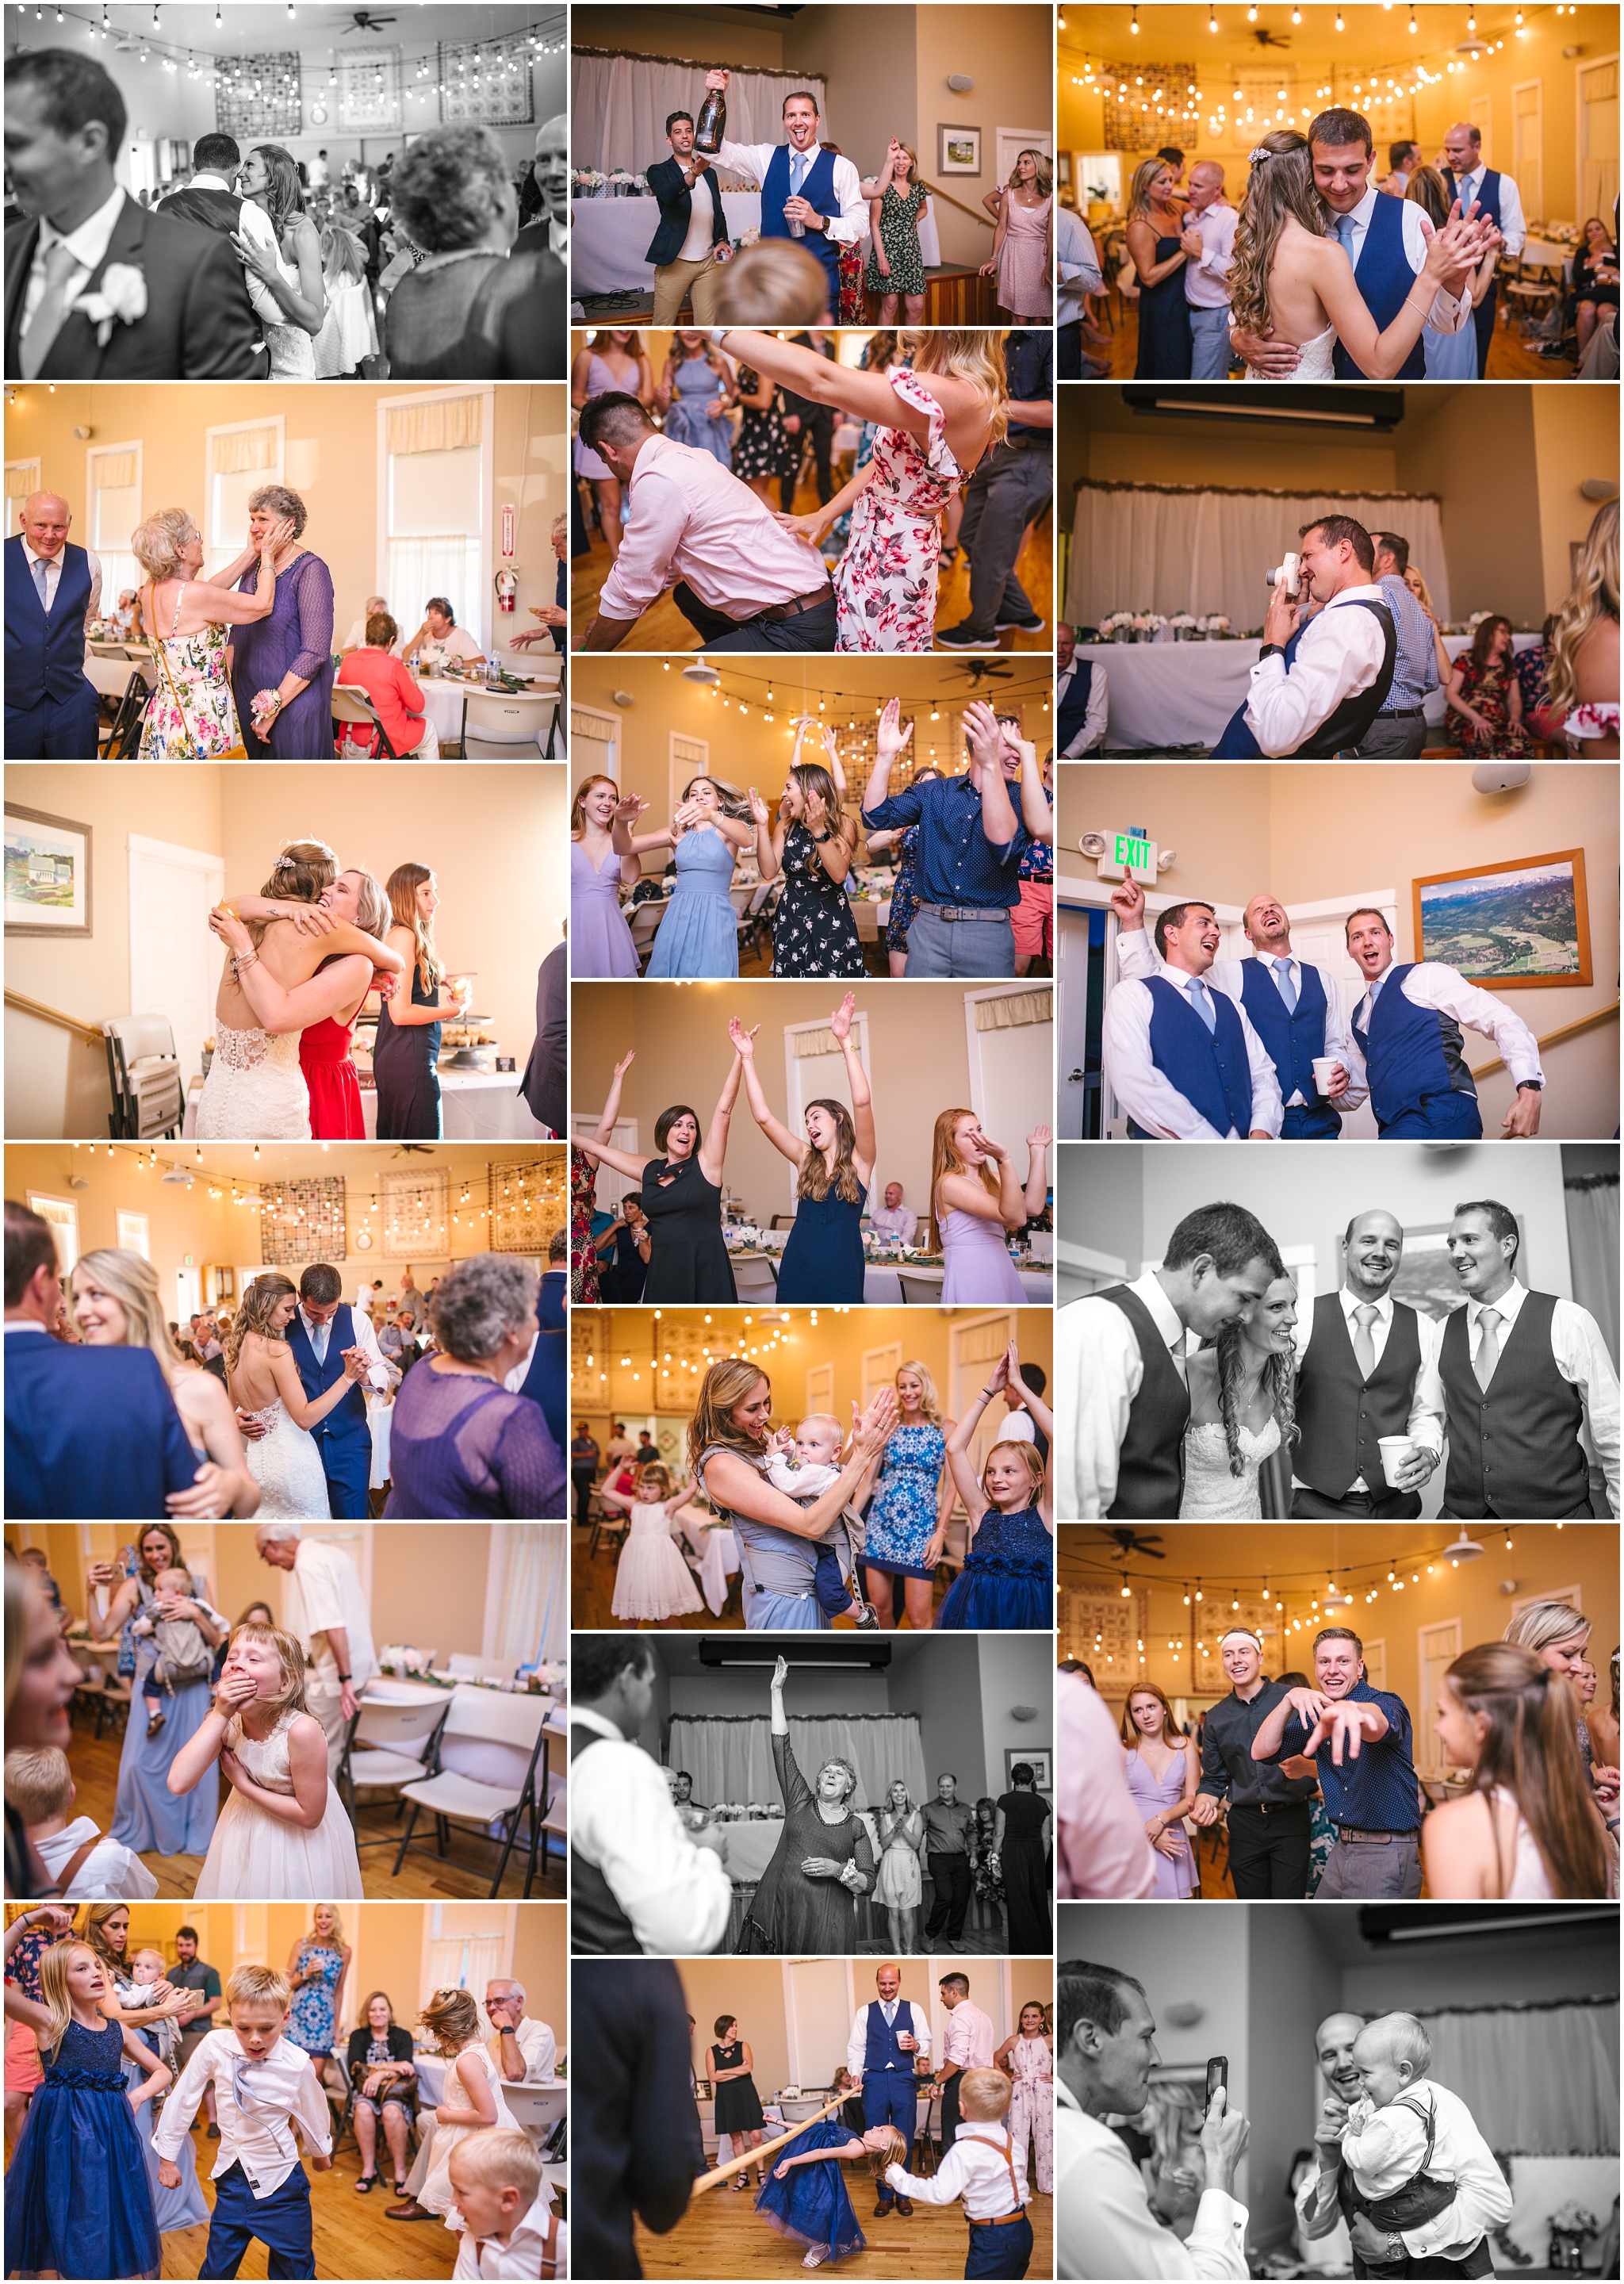 Guests dancing at Swauk Teanaway Grange wedding reception in Cle Elum Washington